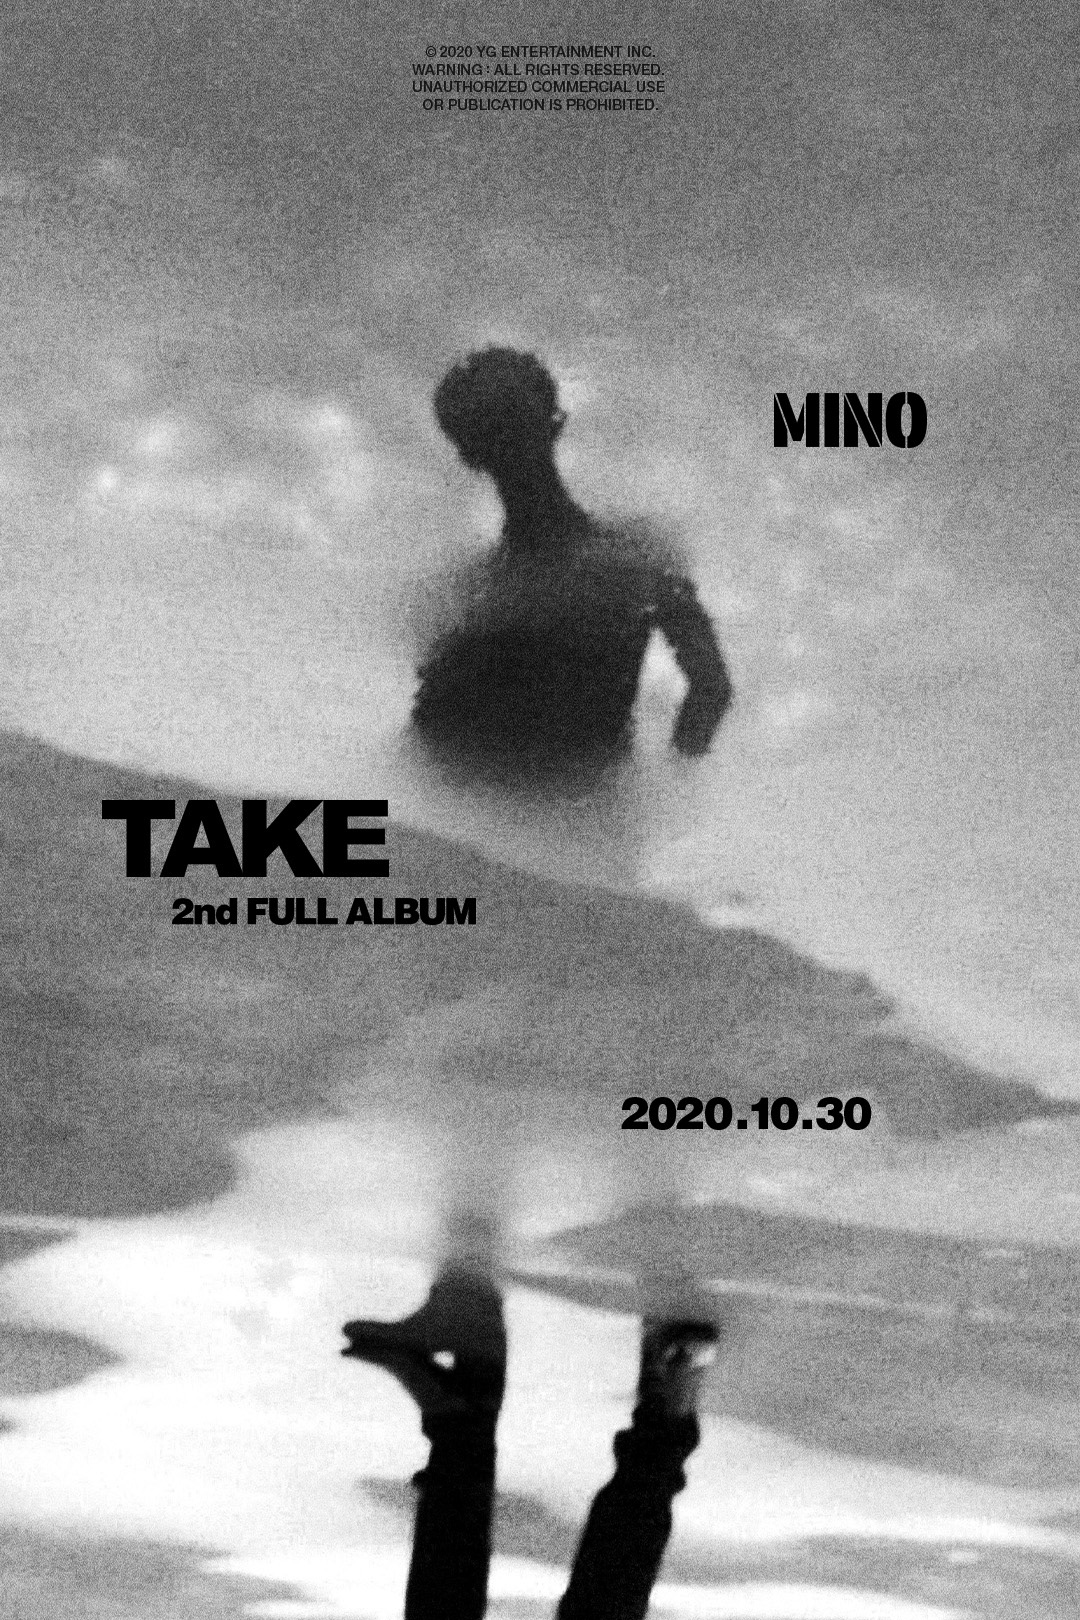 winner-mino-to-make-comeback-on-october-30-with-2nd-solo-full-length-album-2